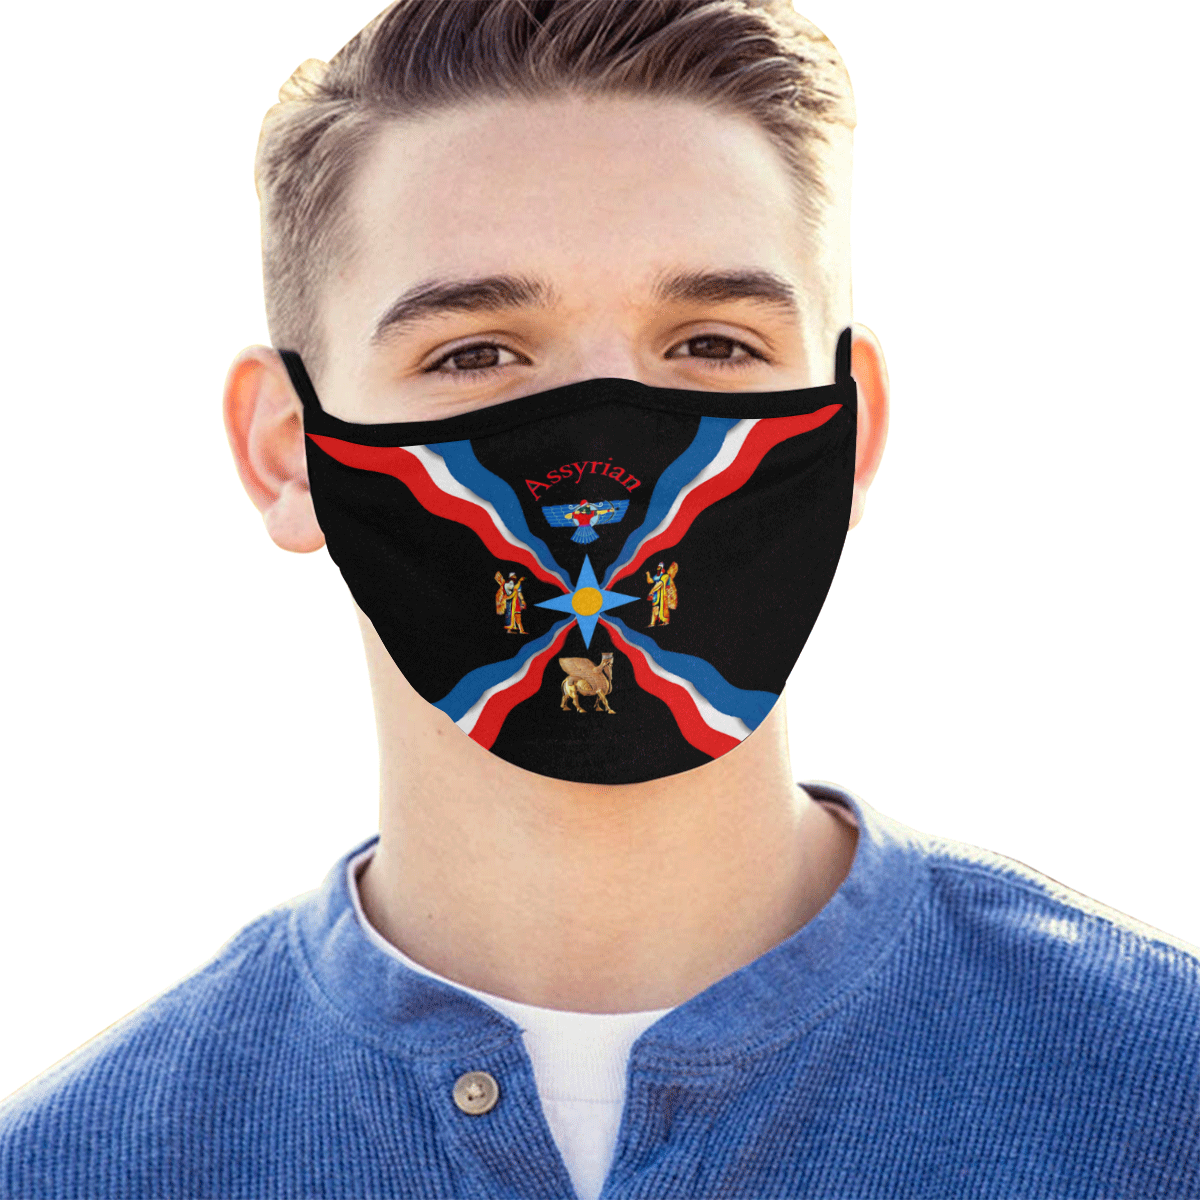 Assyrian Flag & Annunaki Mouth Mask